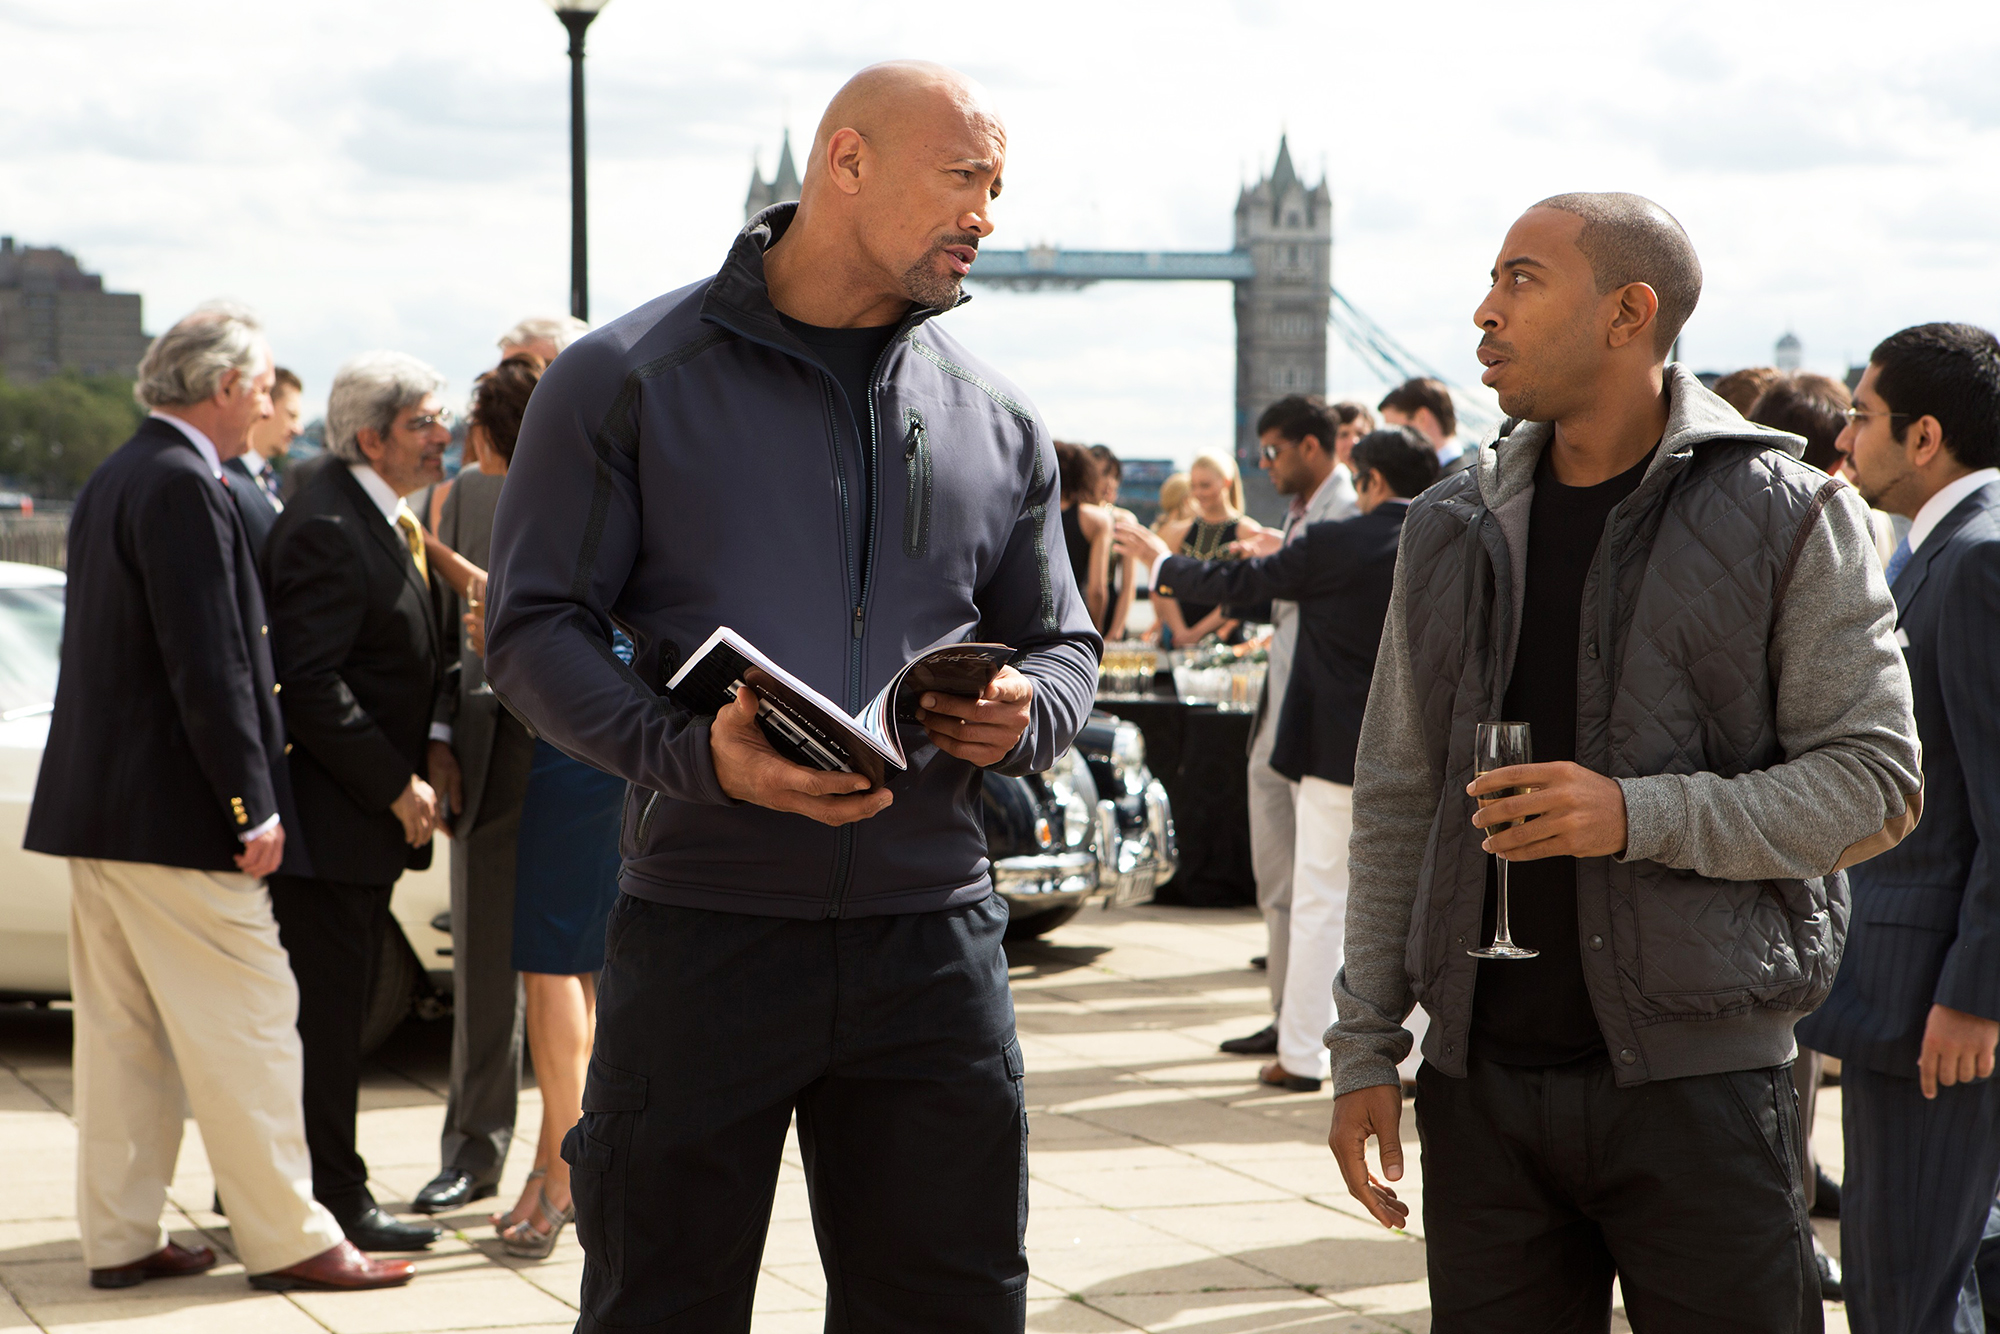 Dwayne Johnson, as Luke Hobbs, and Ludacris, as Tej Parker, in Fast & Furious 6 in 2013.